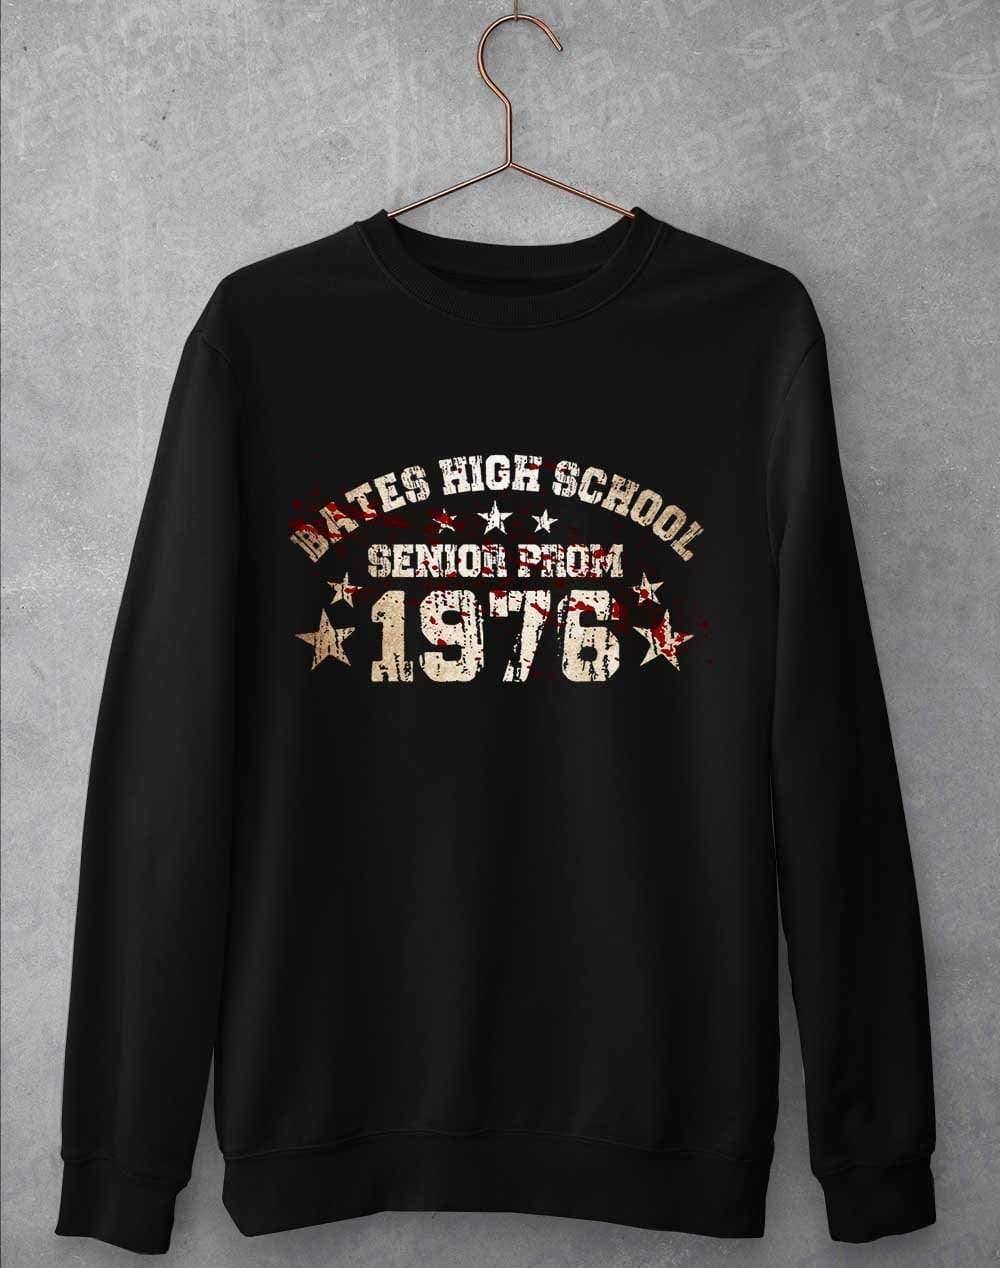 Bates High School Prom 1976 Sweatshirt S / Jet Black  - Off World Tees